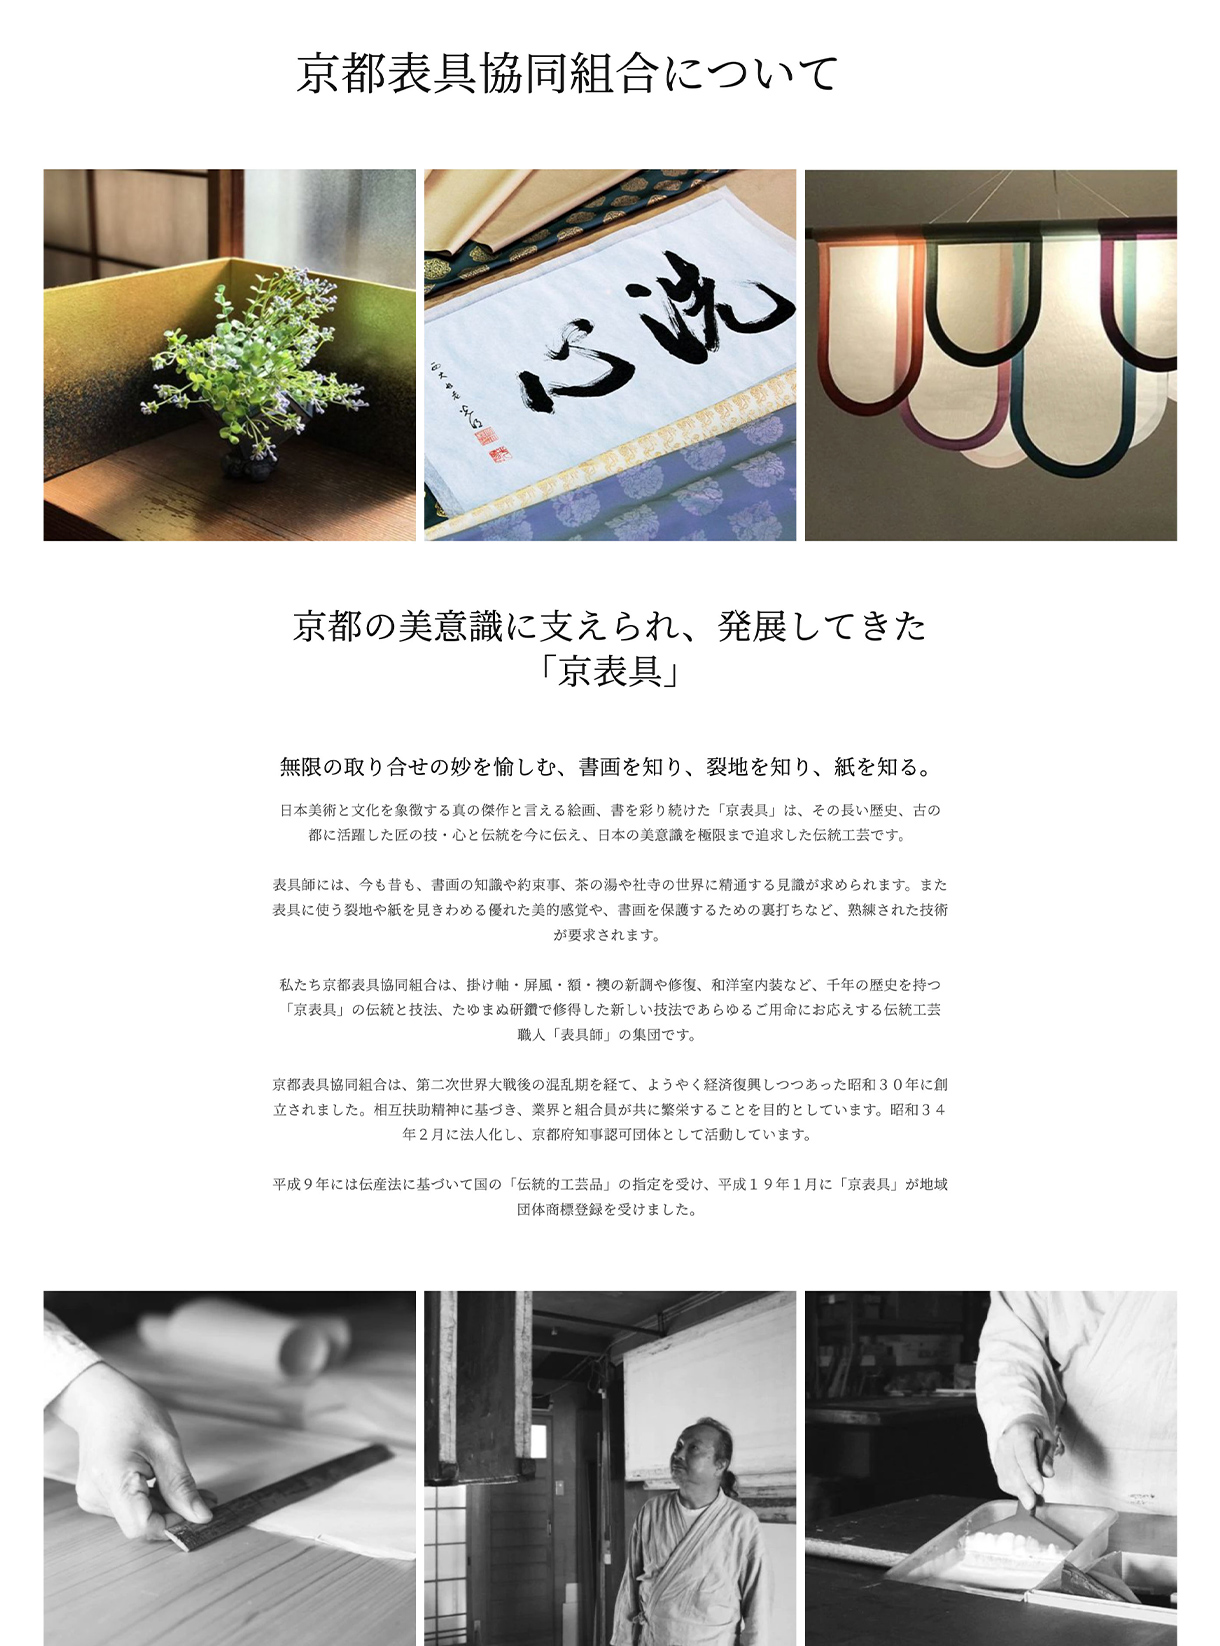 SENSE of 京表具 webサイト 京都表具協同組合についてページの画像